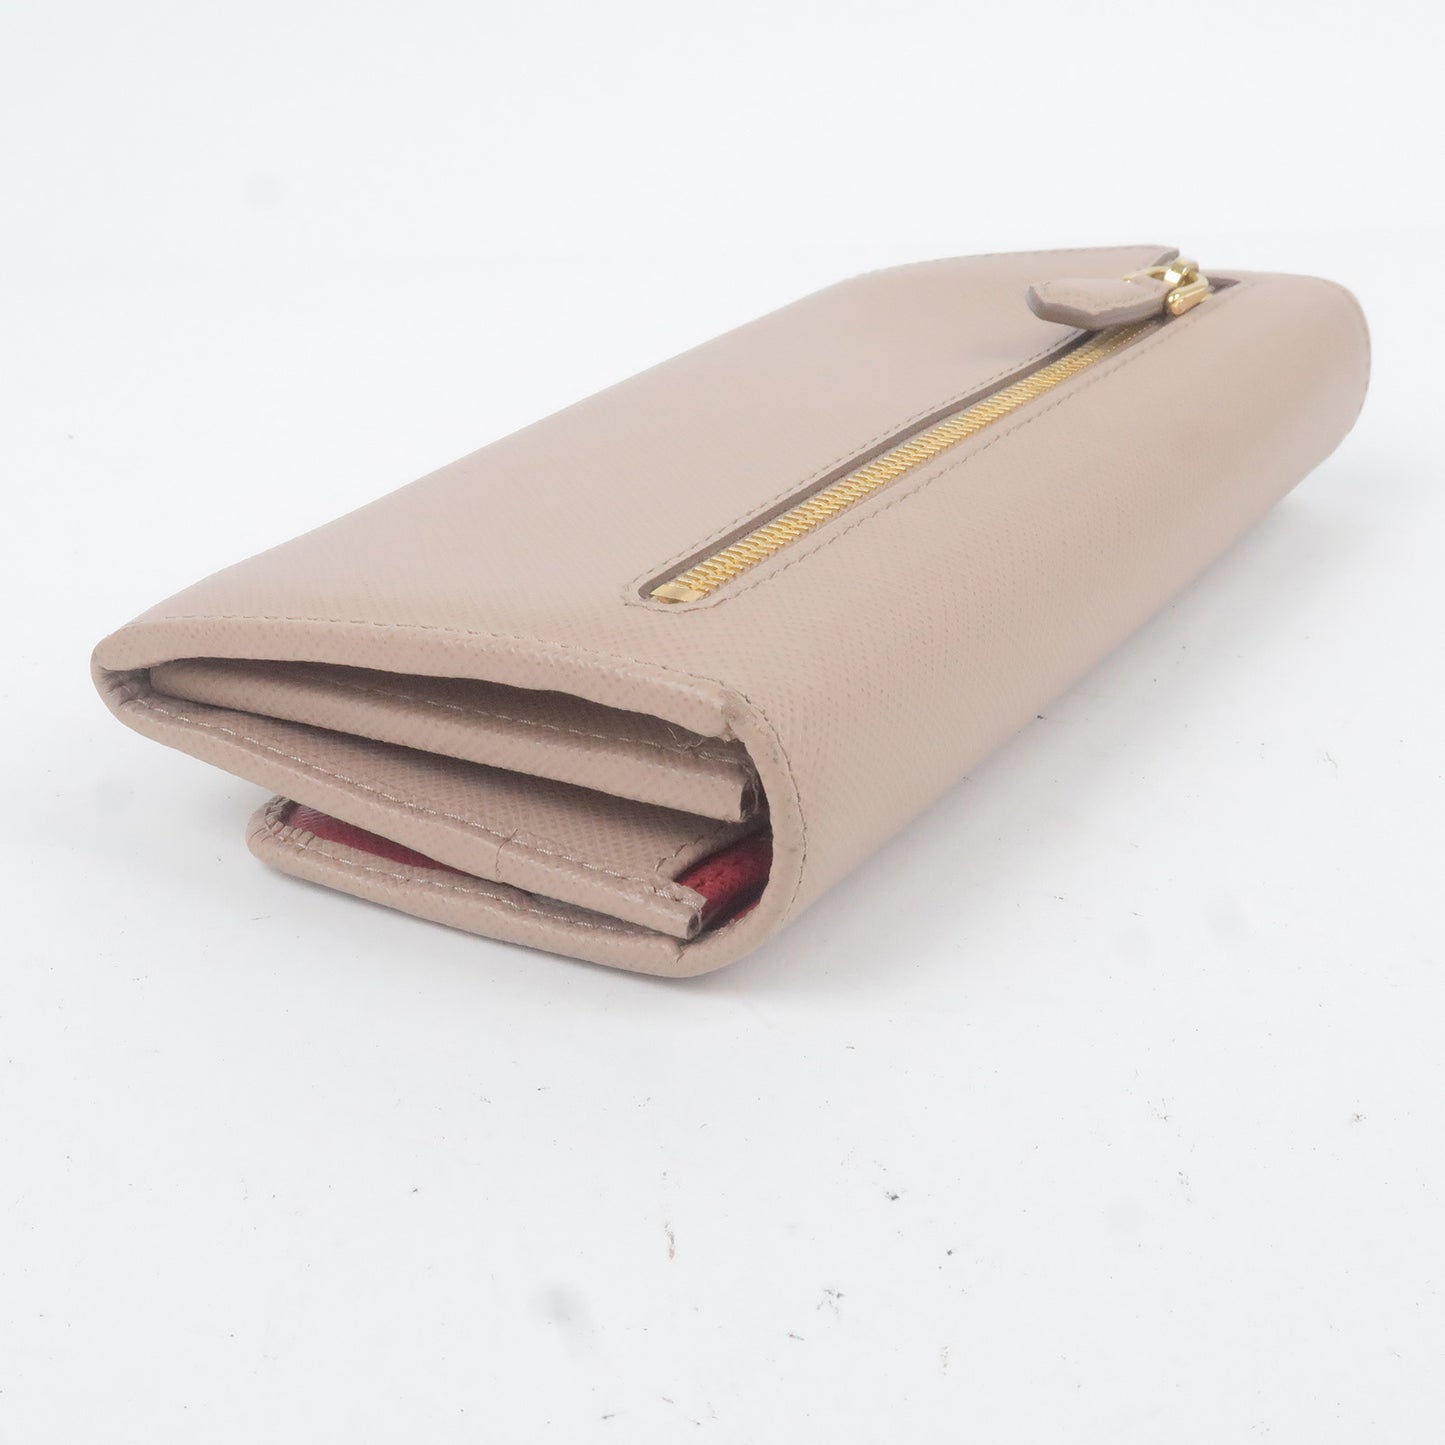 PRADA Leather Bi Fold Long Wallet Beige Red 1MH132